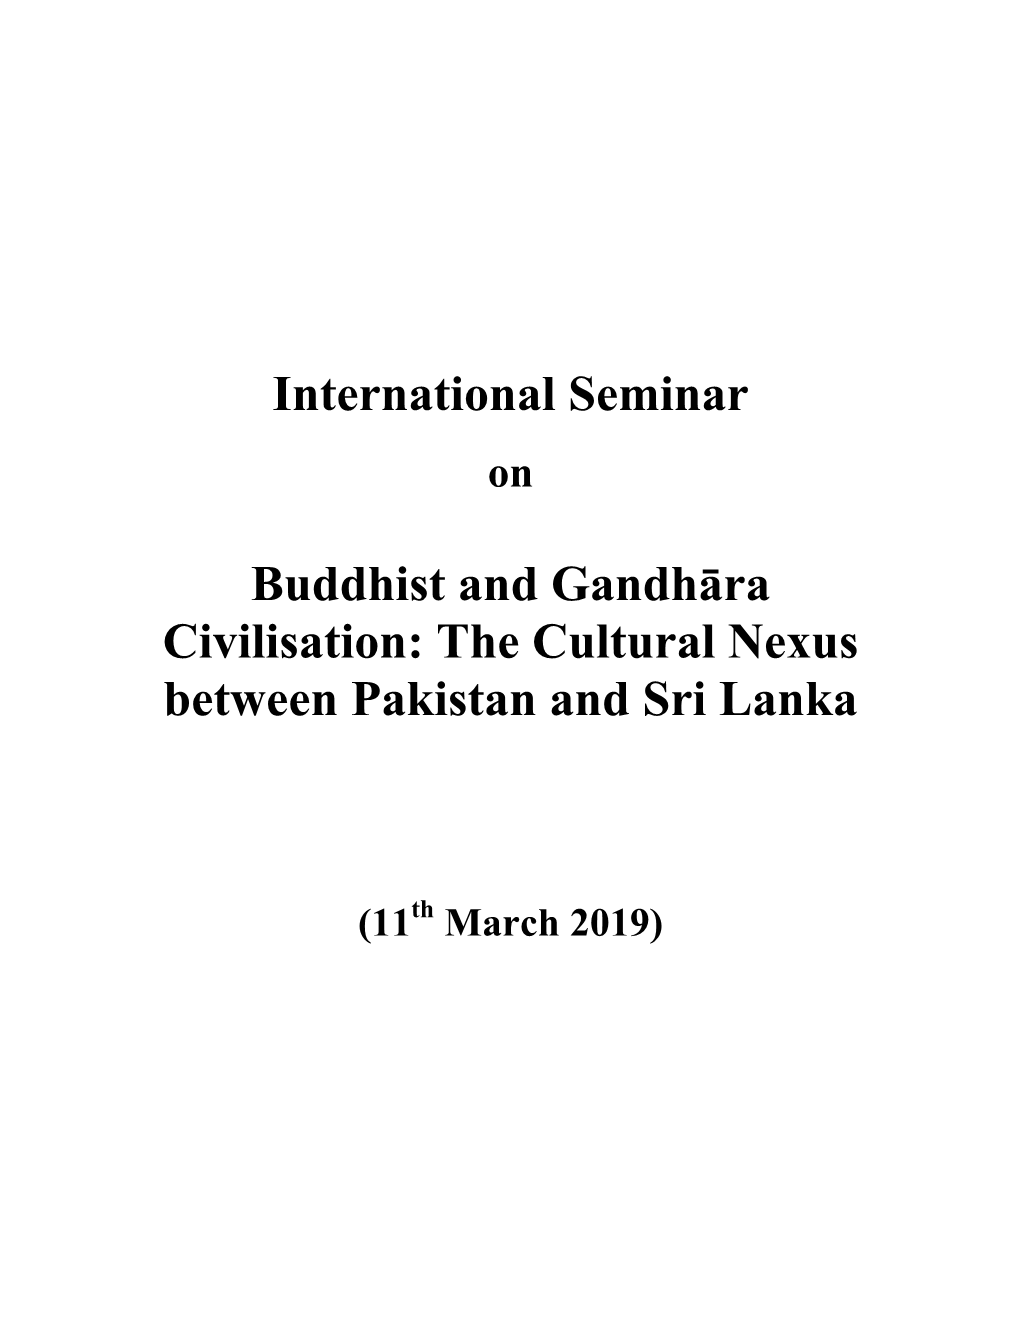 Buddhist & Gandhara Civilization the Cultural Nexus Between Pakistan